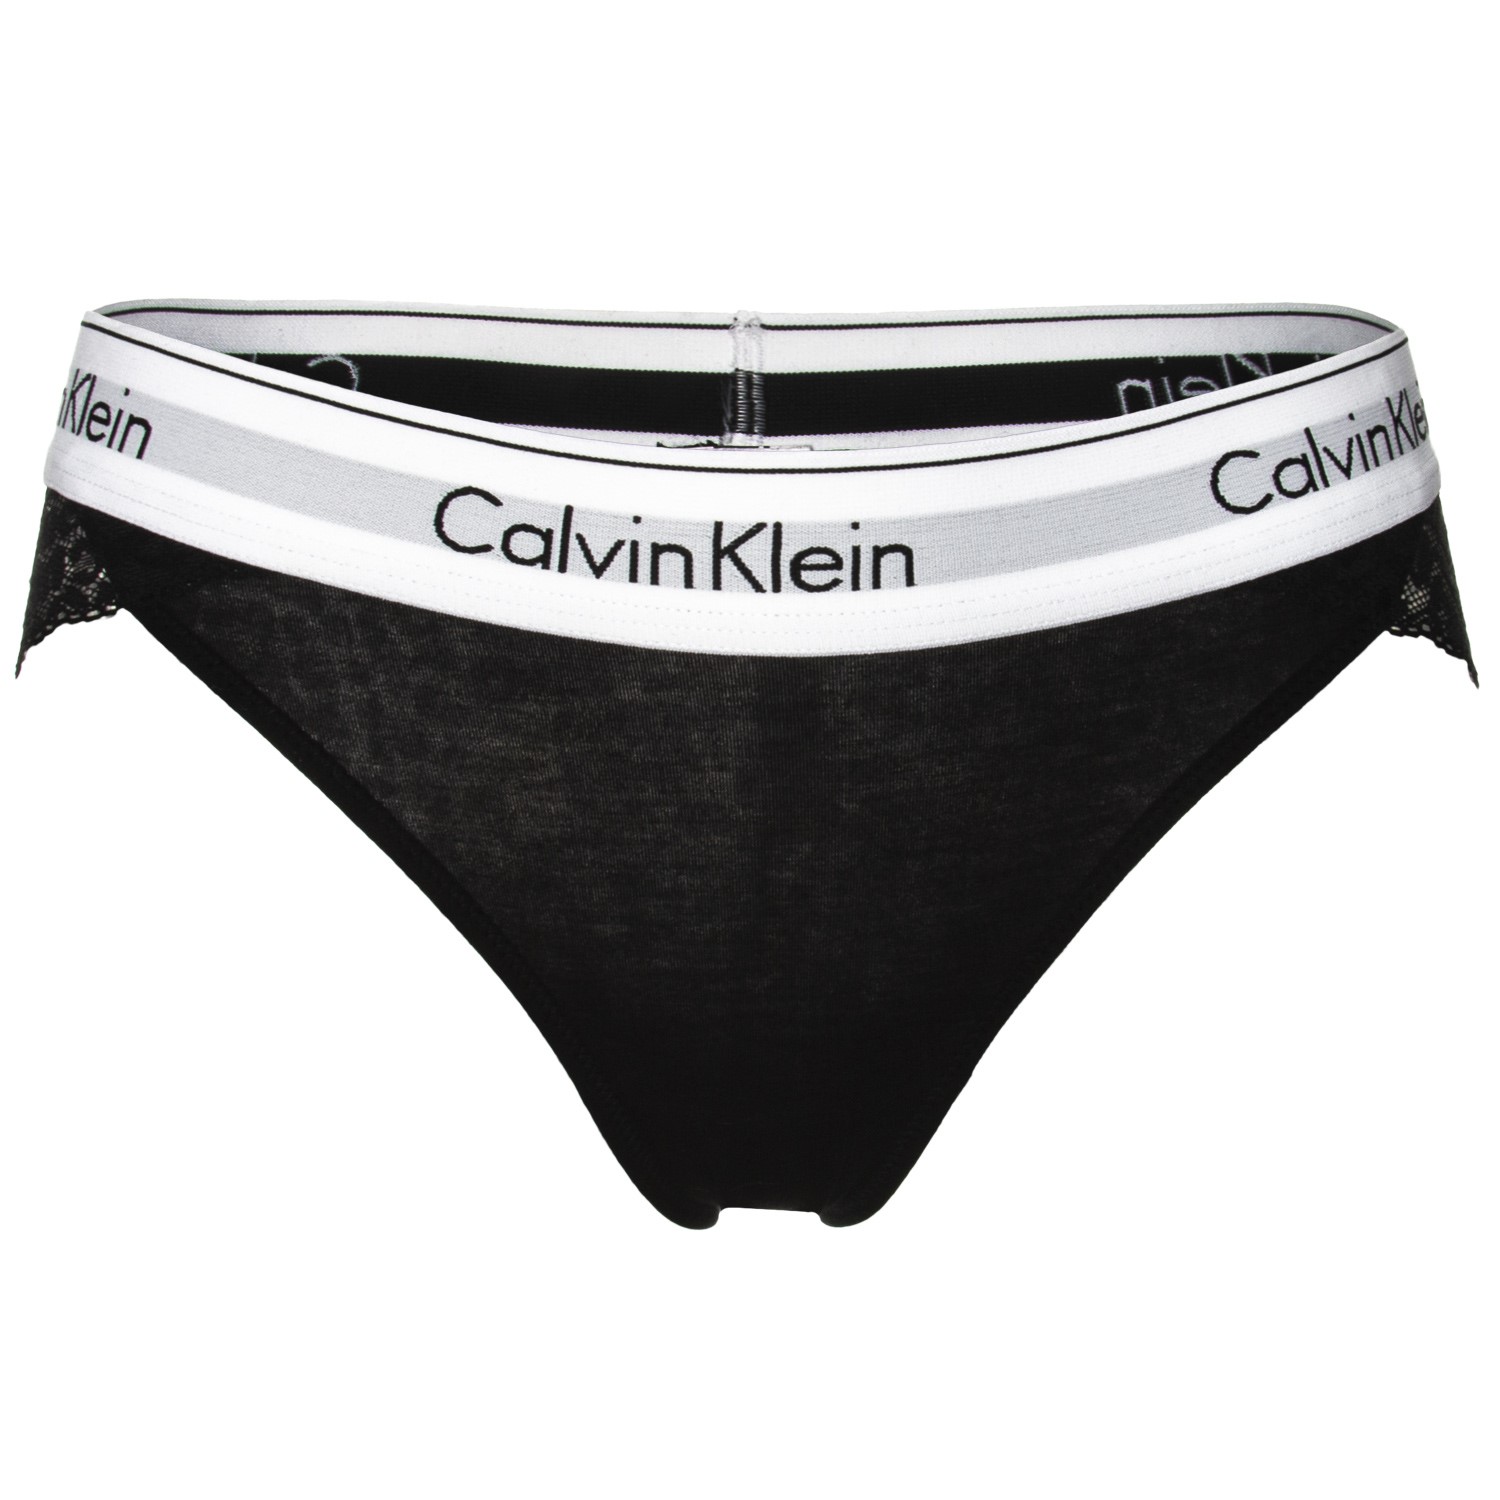 Calvin Klein Modern Cotton Lace Bikini - Brief - Briefs